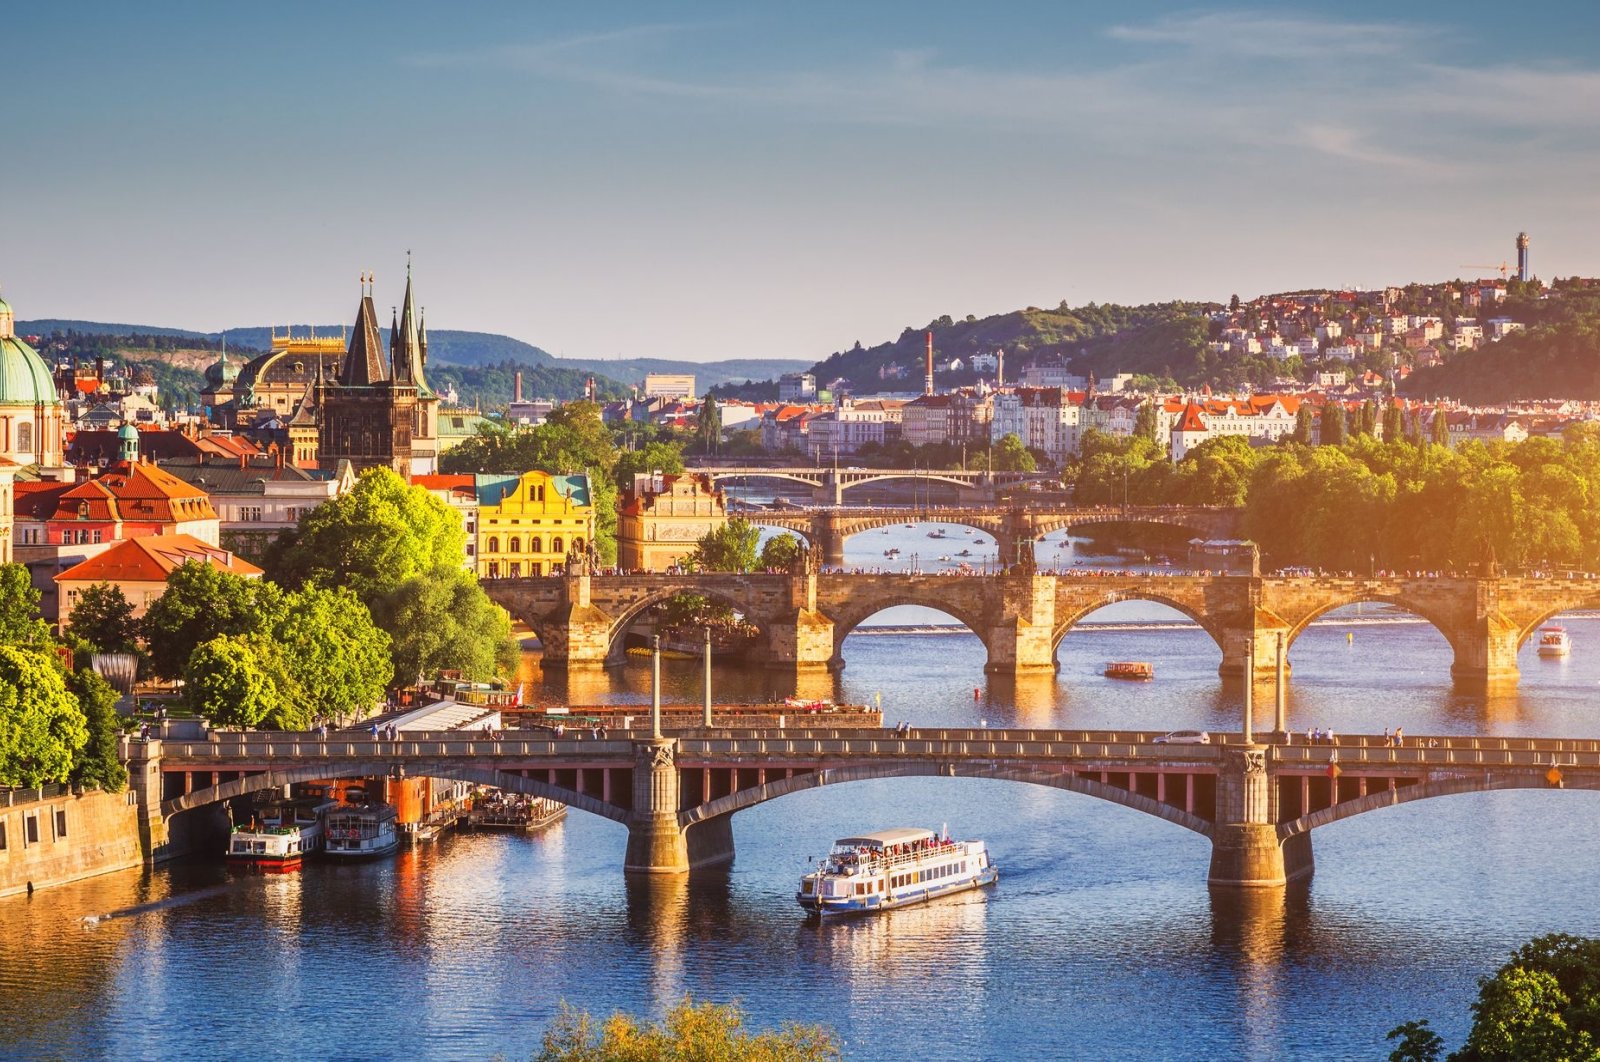 The Old Town pier and Charles Bridge over Vltava river in Prague, Czech Republic. (Shutterstock Photo)